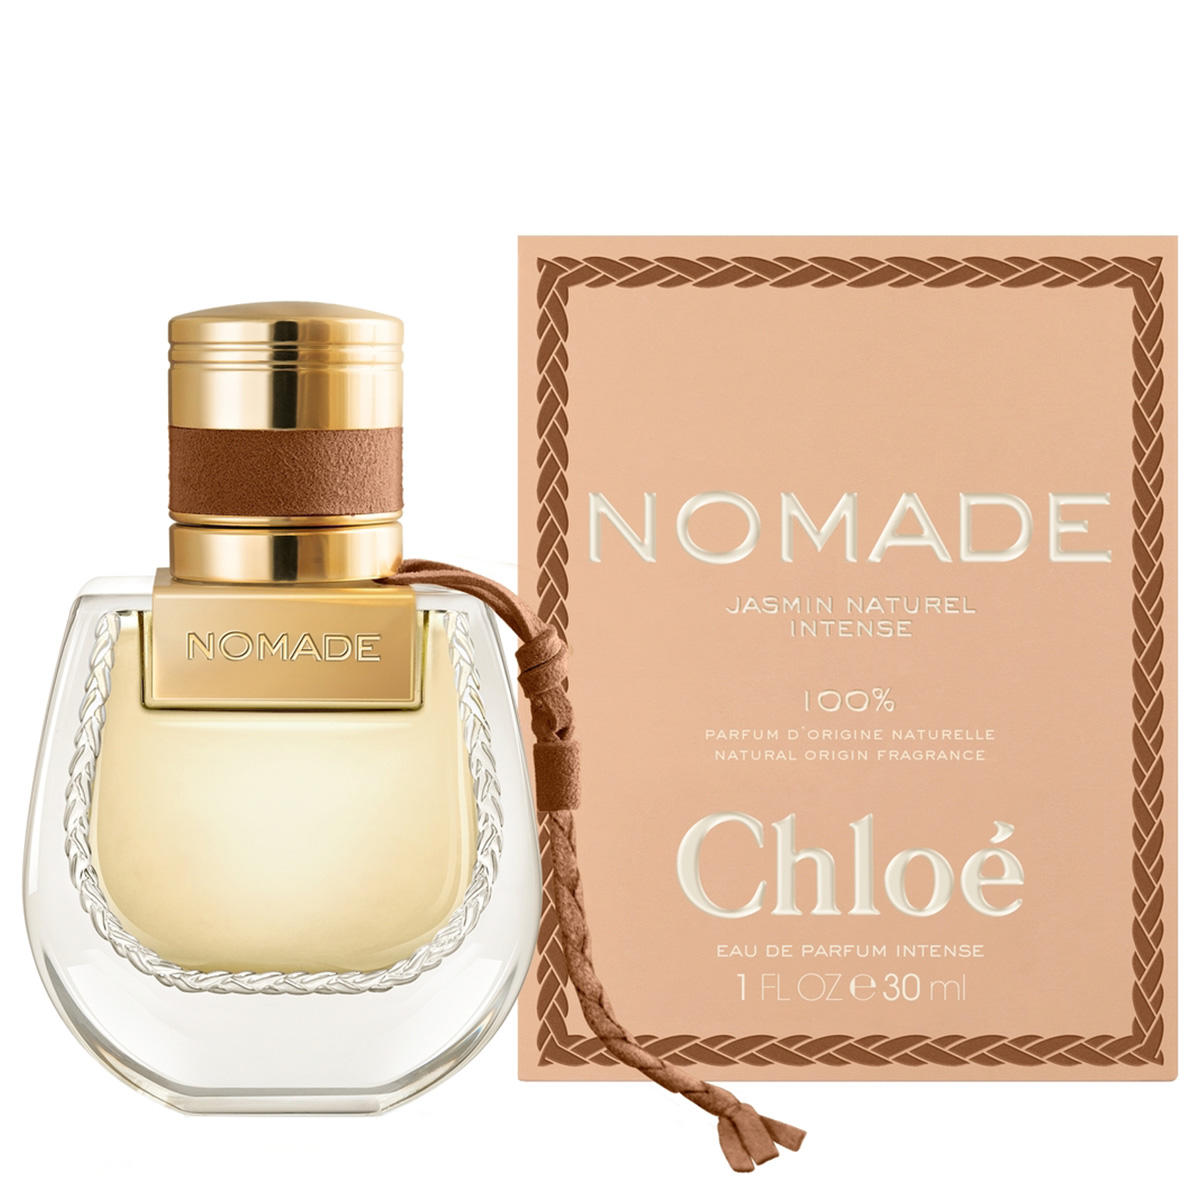 Chloé Nomade Jasmin Naturel Intense Eau de Parfum 30 ml - 2